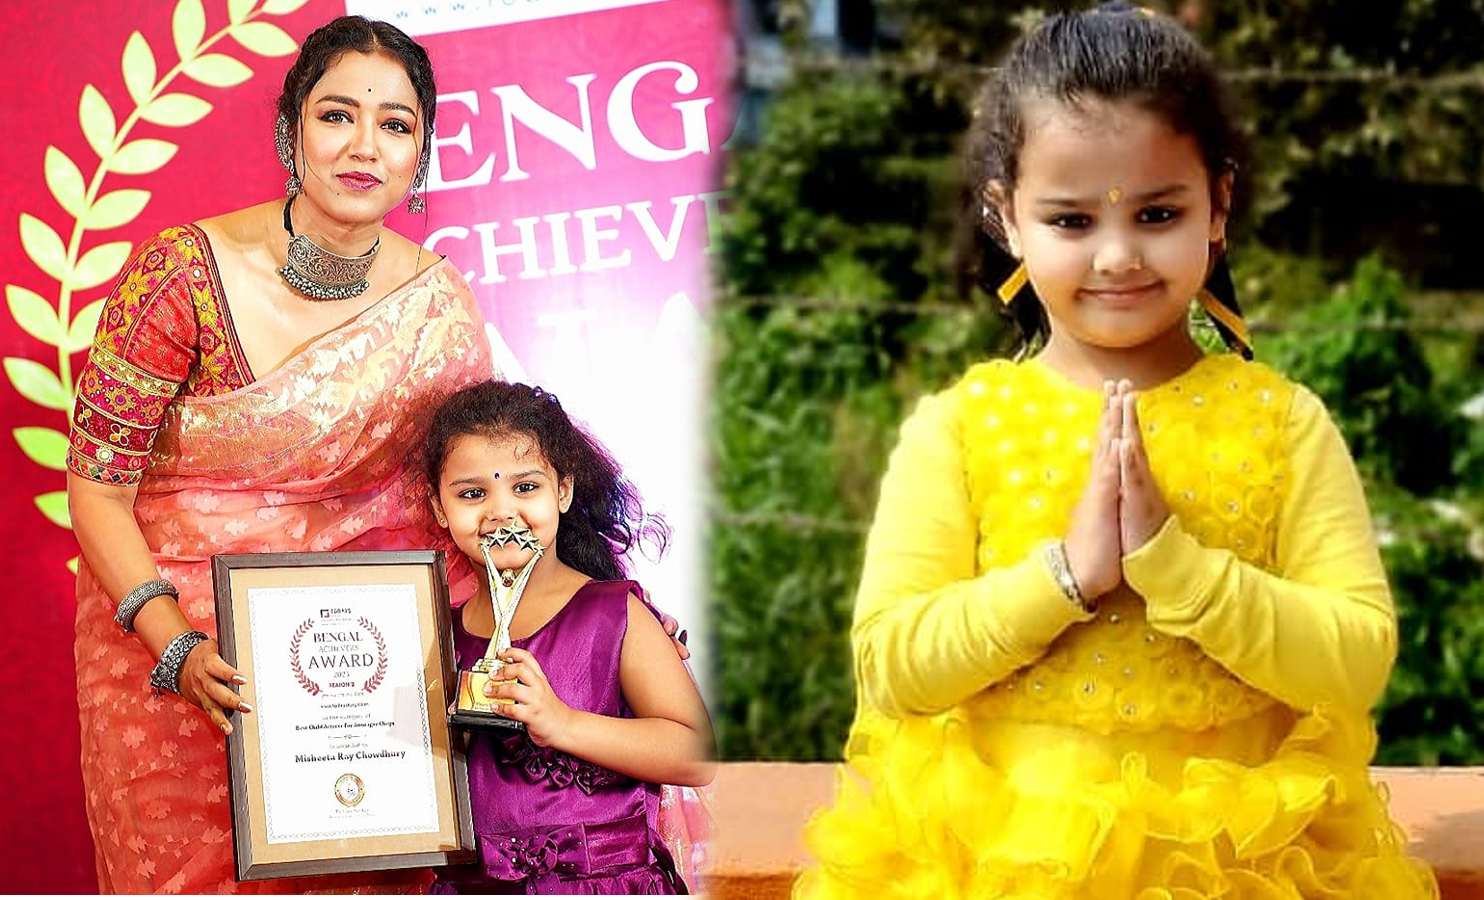 Anurager Chhowa sona actress Misheeta Ray Chowdhury best child actress in Bengali Achivers Award